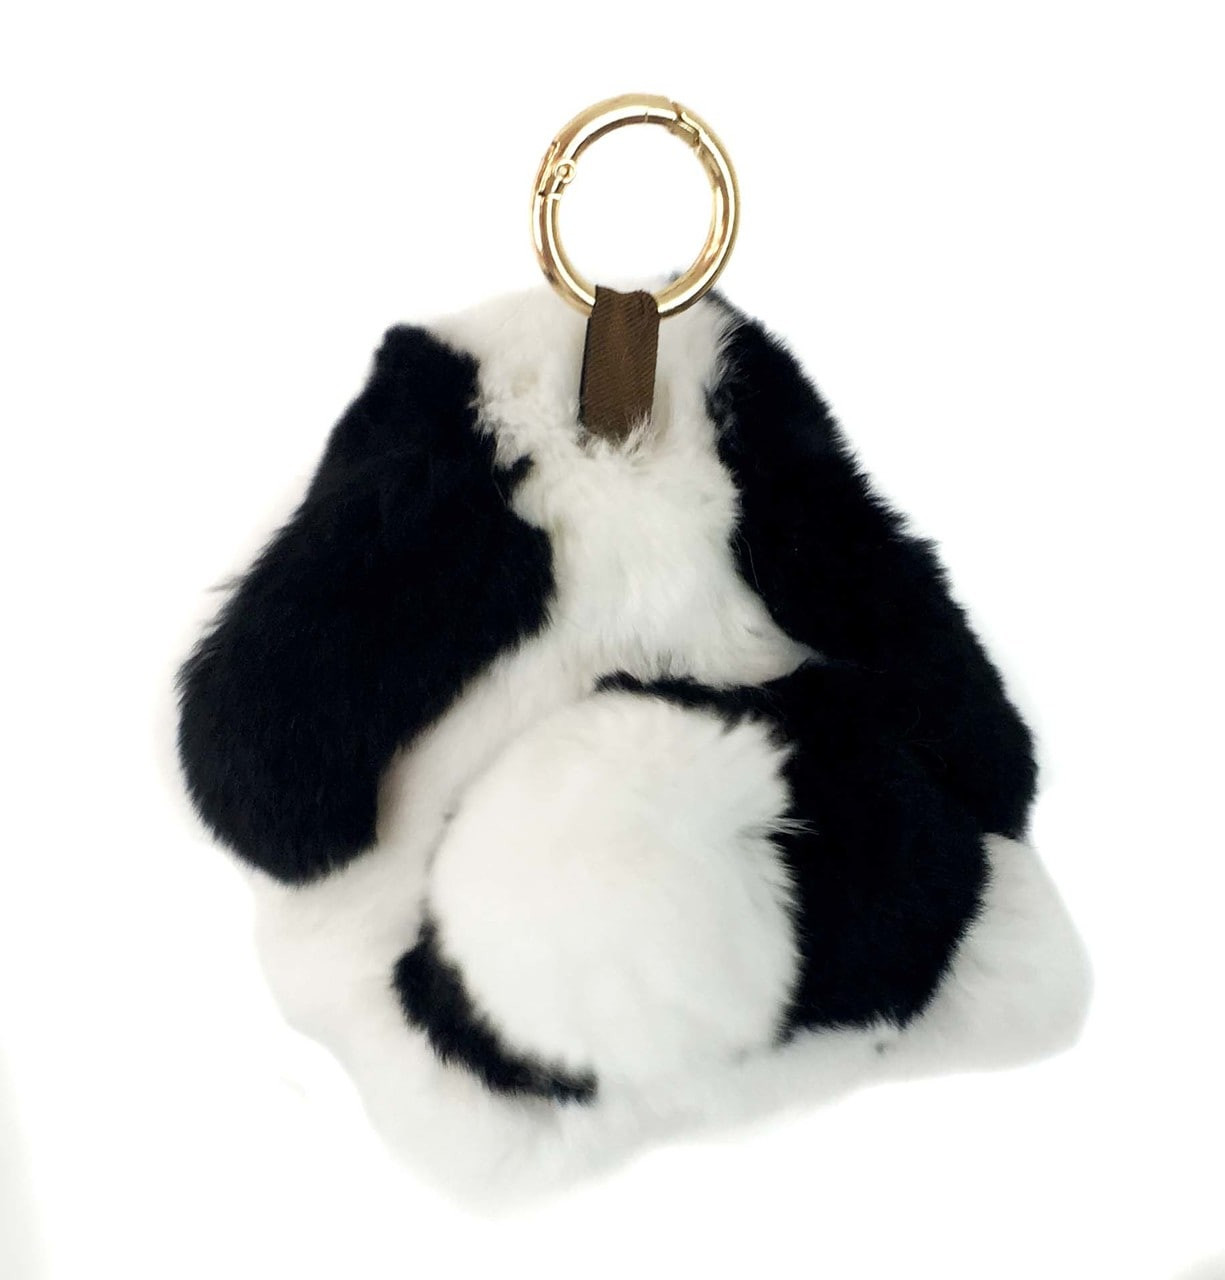 1pc Fashionable Natural Black Rabbit Fur Dog Shaped Keychain